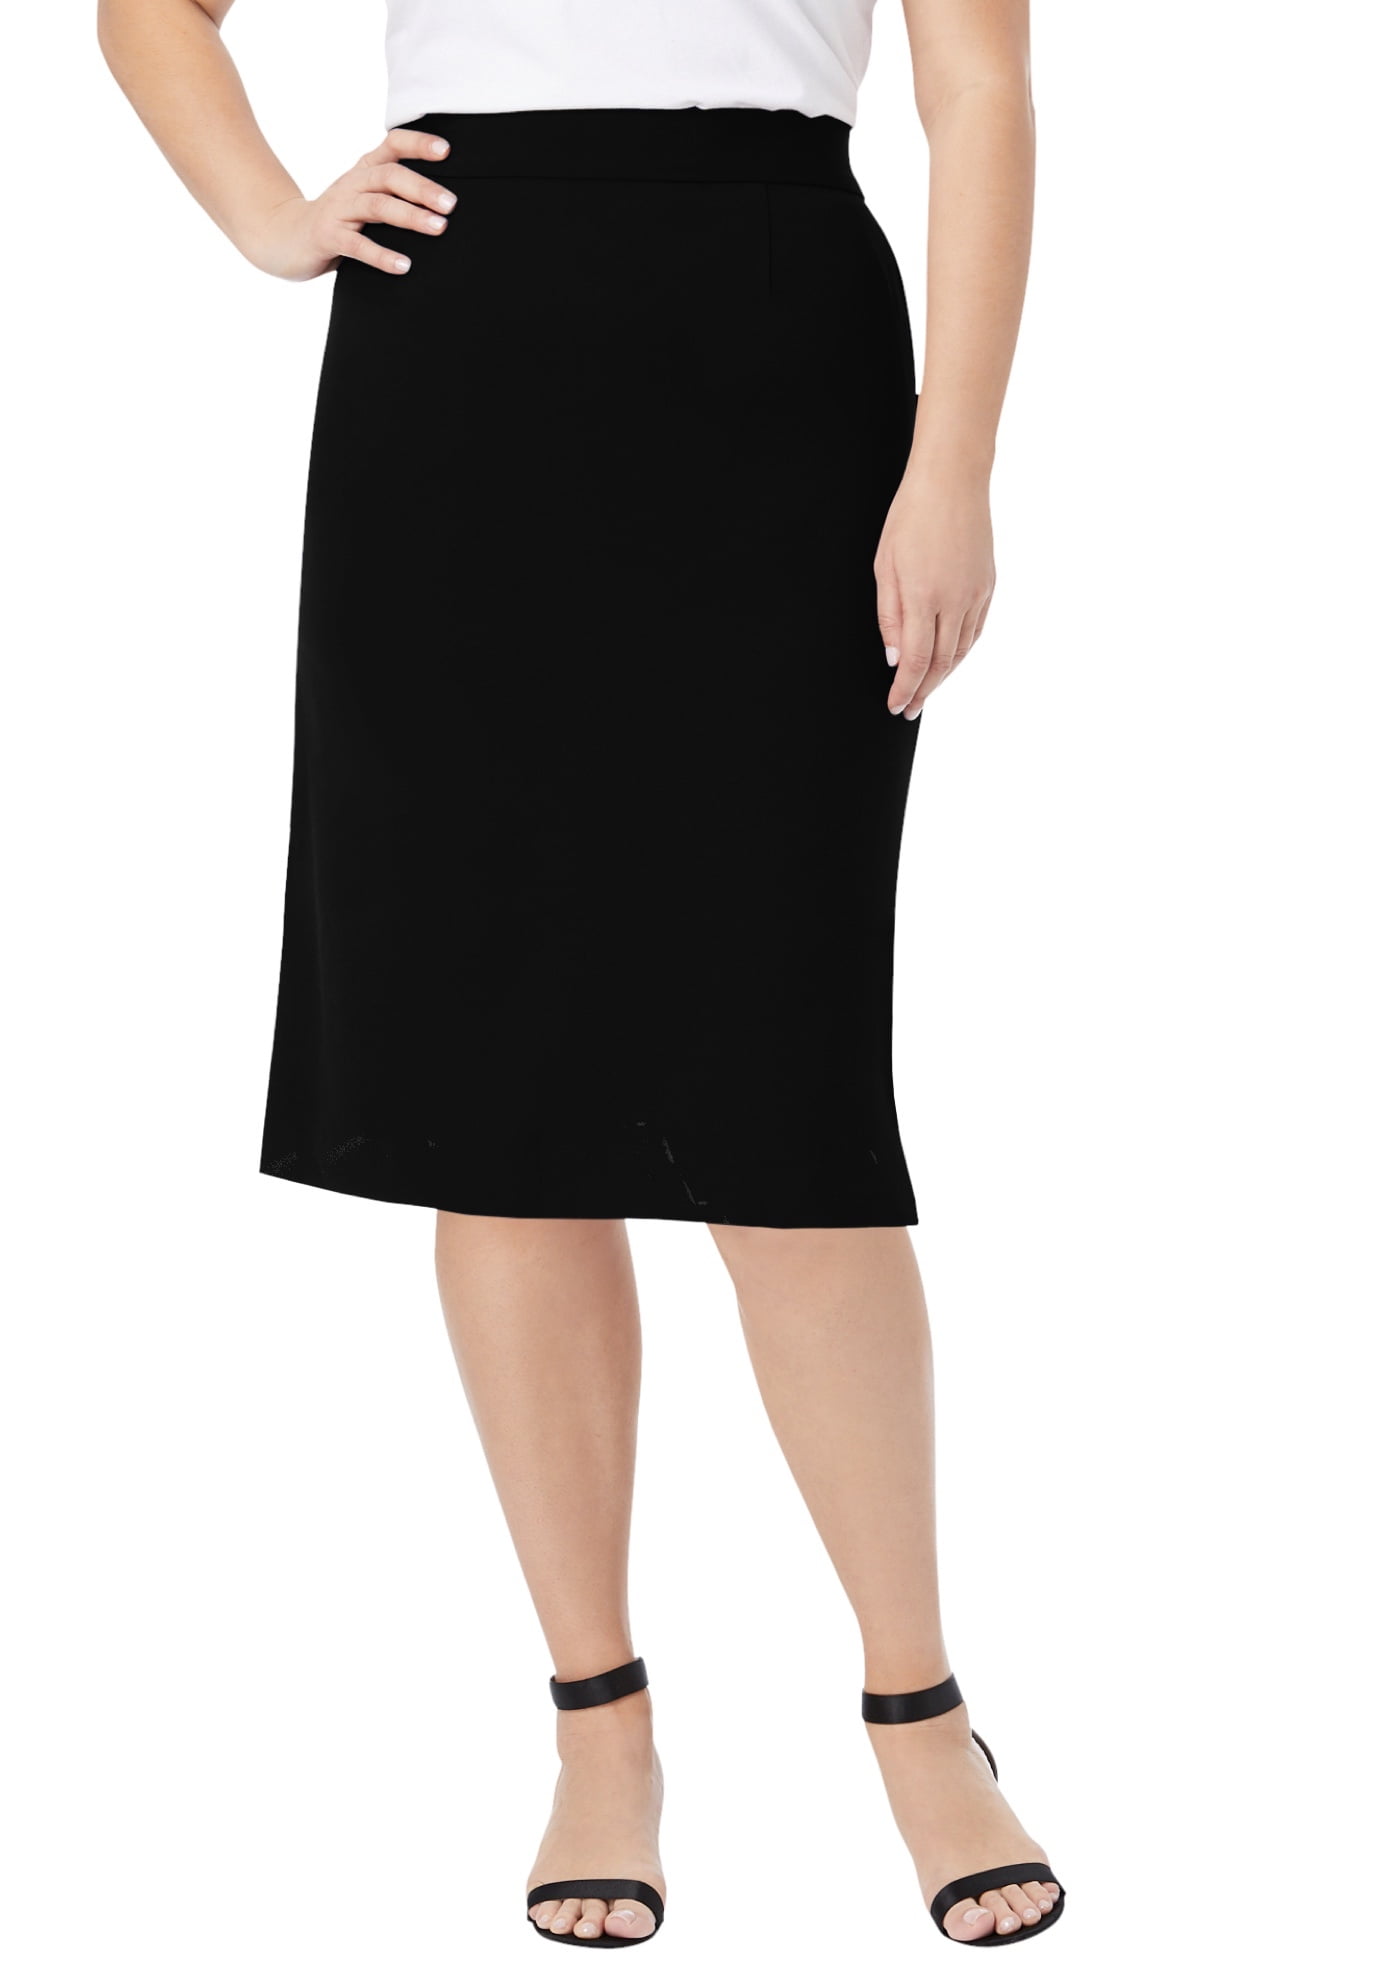 Womens Plus Size 16-30 Black & White Check Print Calf Length Pencil Skirt 